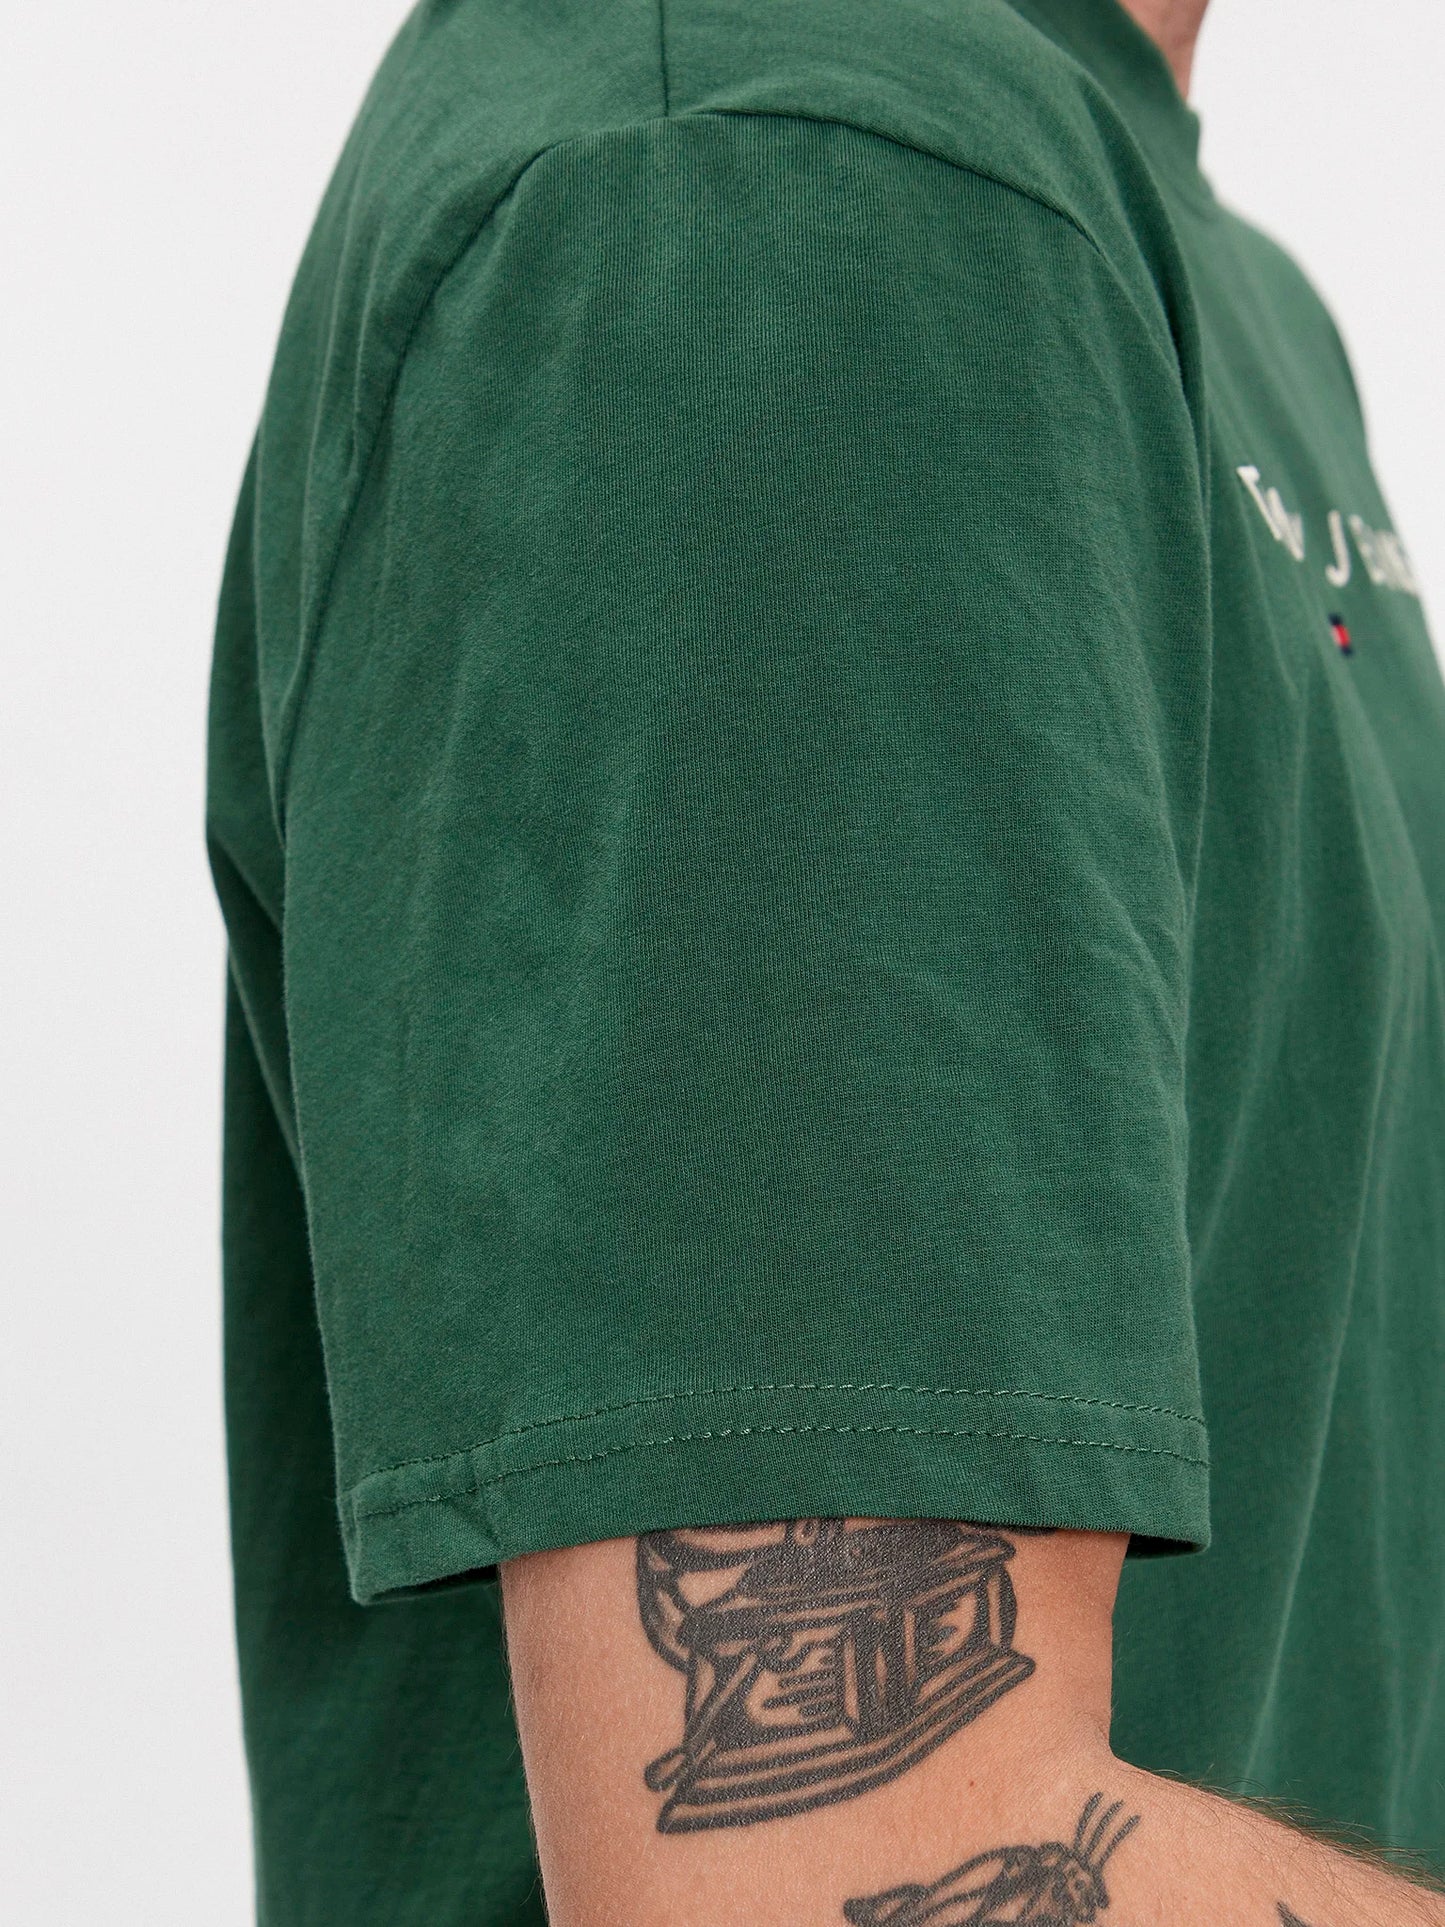 Tommy Jeans Tricou Linear Logo - Verde Regular Fit